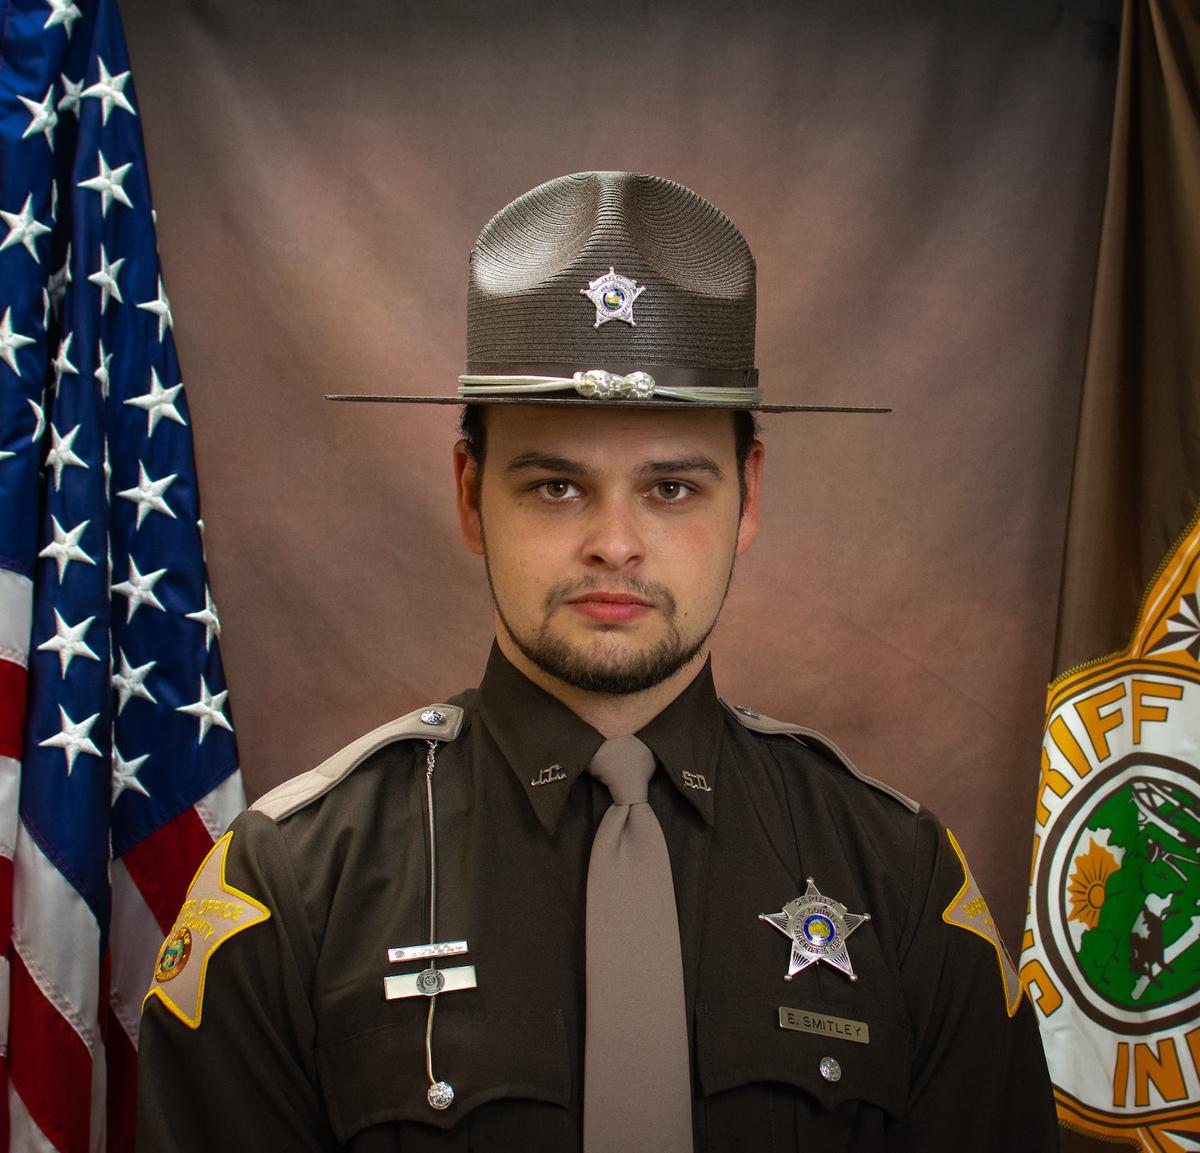 Deputy Eric Smitley. (Courtesy of <a href="https://www.facebook.com/JayCountySheriffsOffice/">Jay County Sheriff's Office</a>)